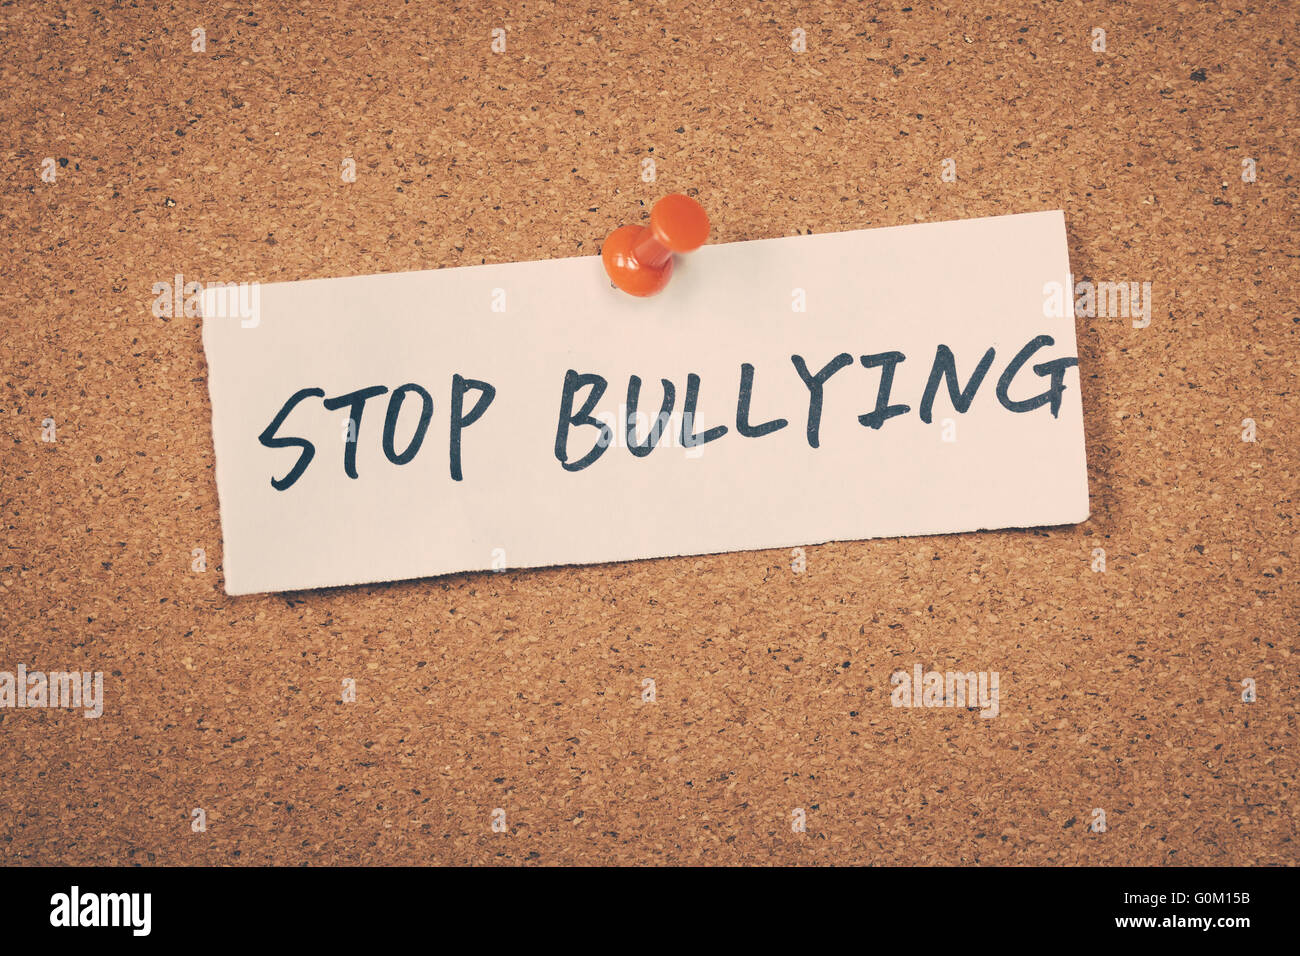 Stop bullying Stock Photo